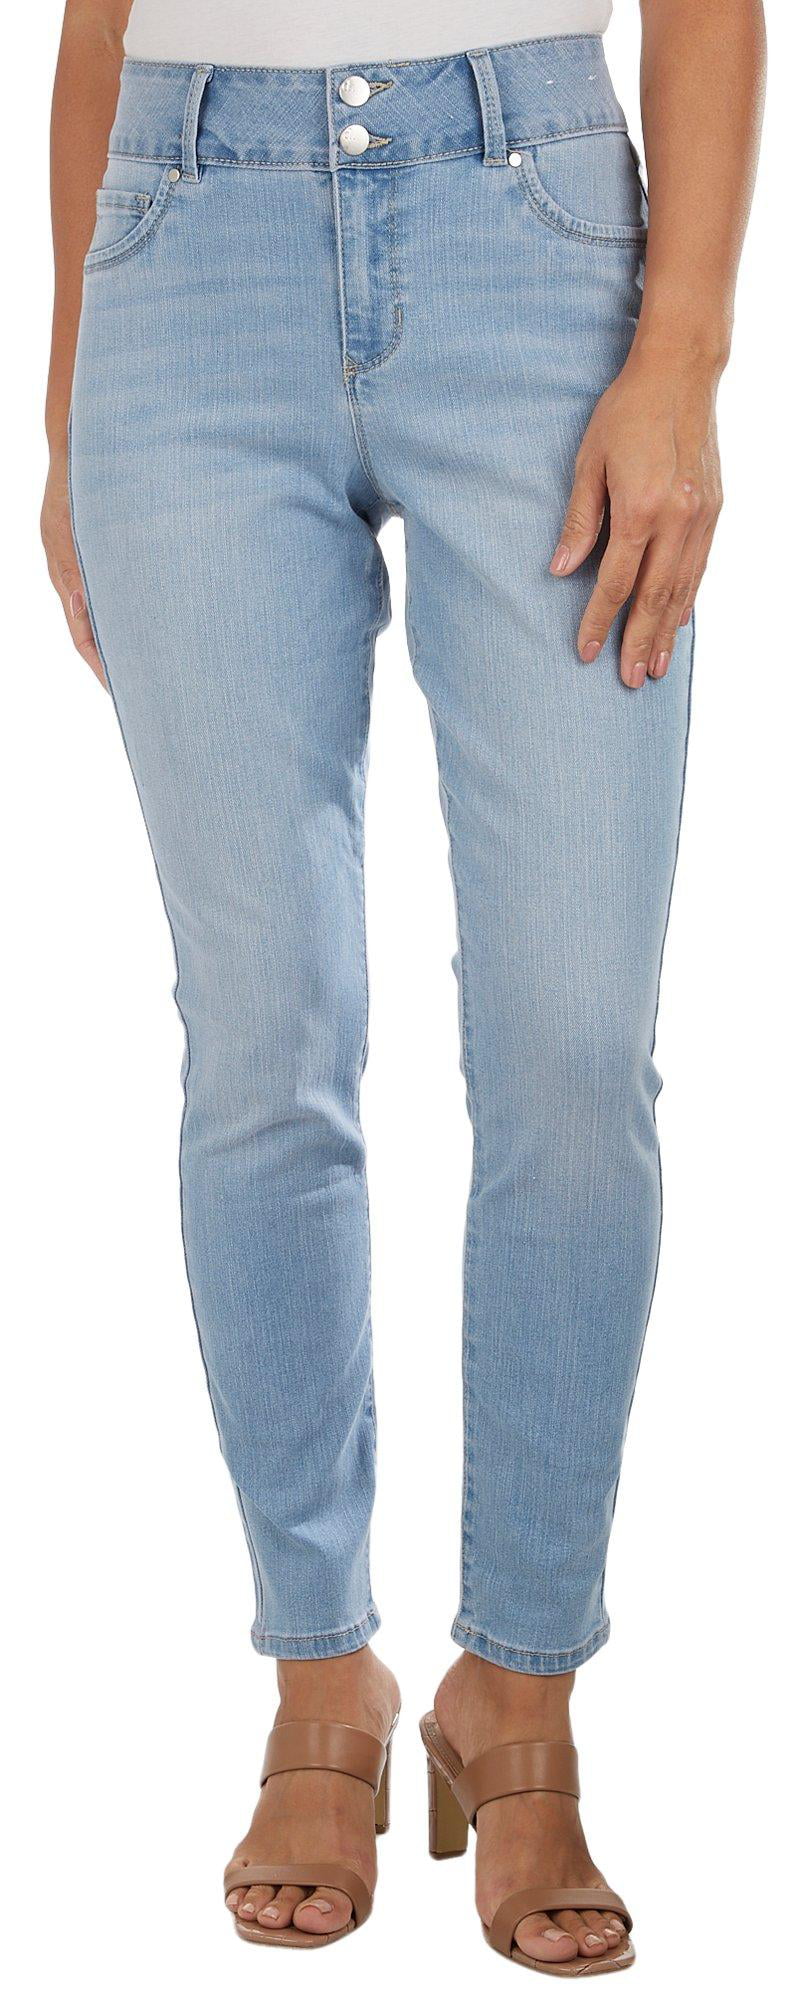  Womens 29 in. High Waist Repreve Skinny Jeans 16 Light blue wash -  